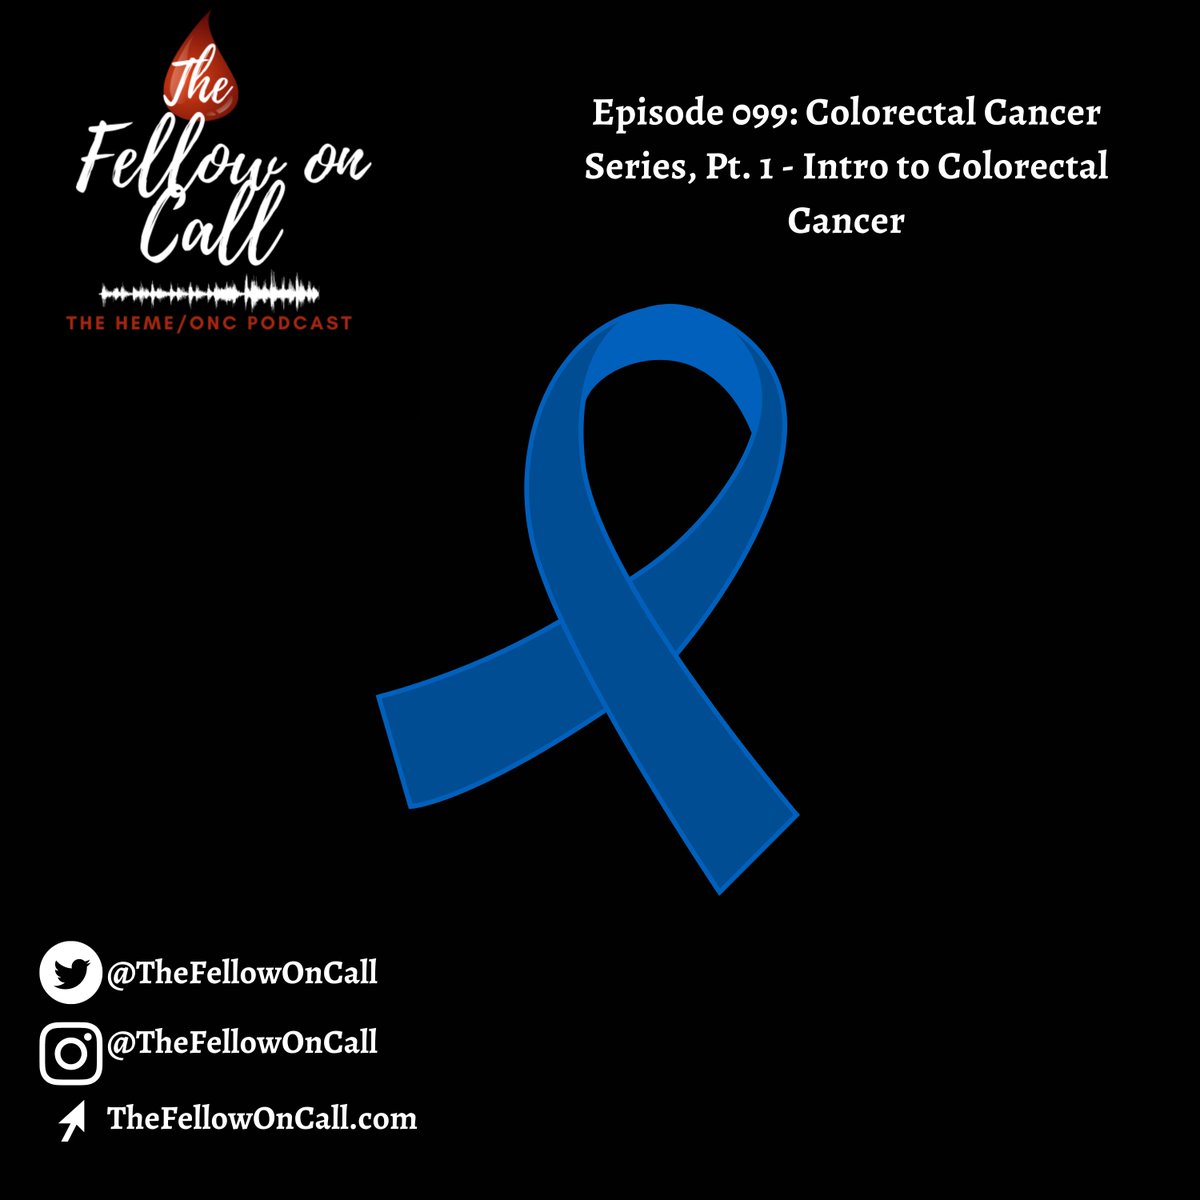 New episode and series alert! Link in bio!
@NUHemOncFellow
@UMHemOncFellows
@OchsnerHemOnc
@UtahHemeOnc
@UCDHemeOnc
@VUMCHemOnc
@UCHemOncFellows

#MedEd #MedicalEducation #Hematology #Oncology #HemeOnc #Podcast #MedicalStudent #Residency #InternalMedicine